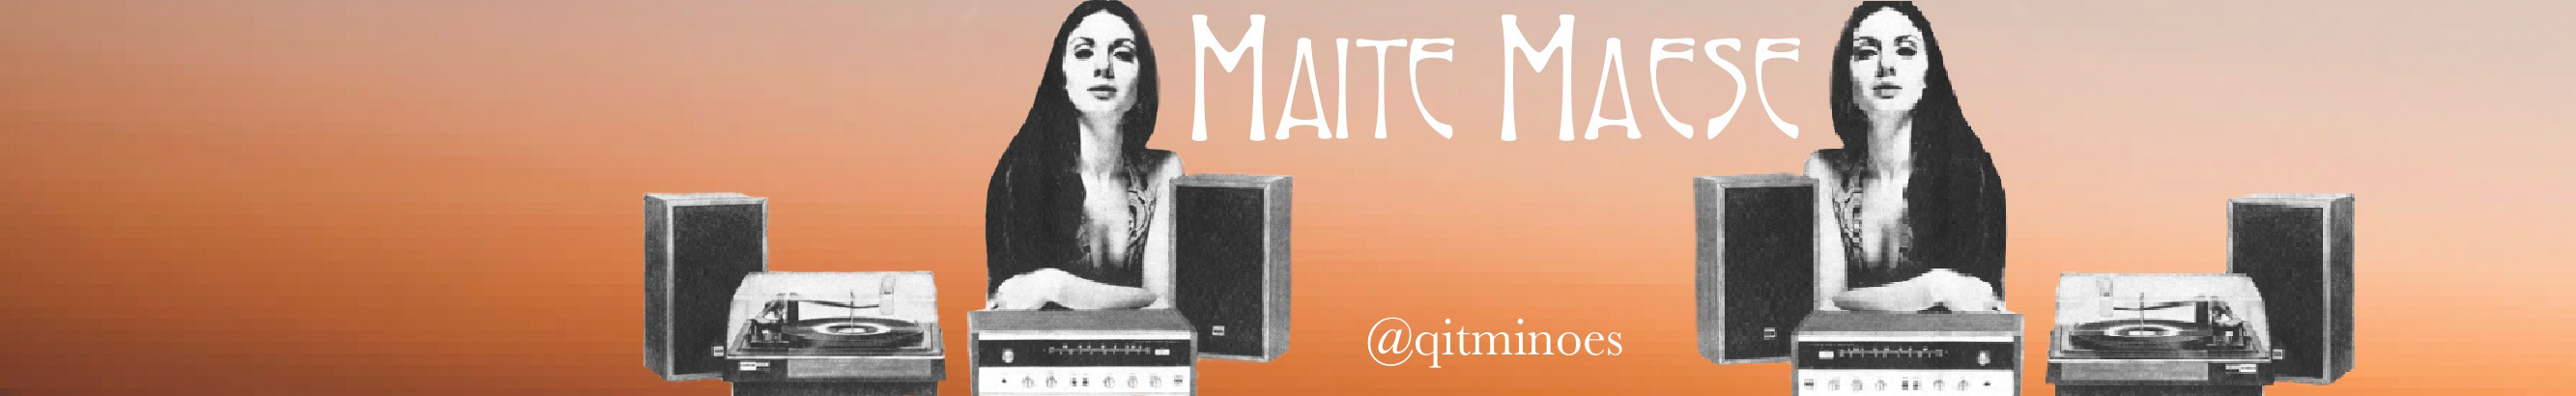 Maite Maese's profile banner